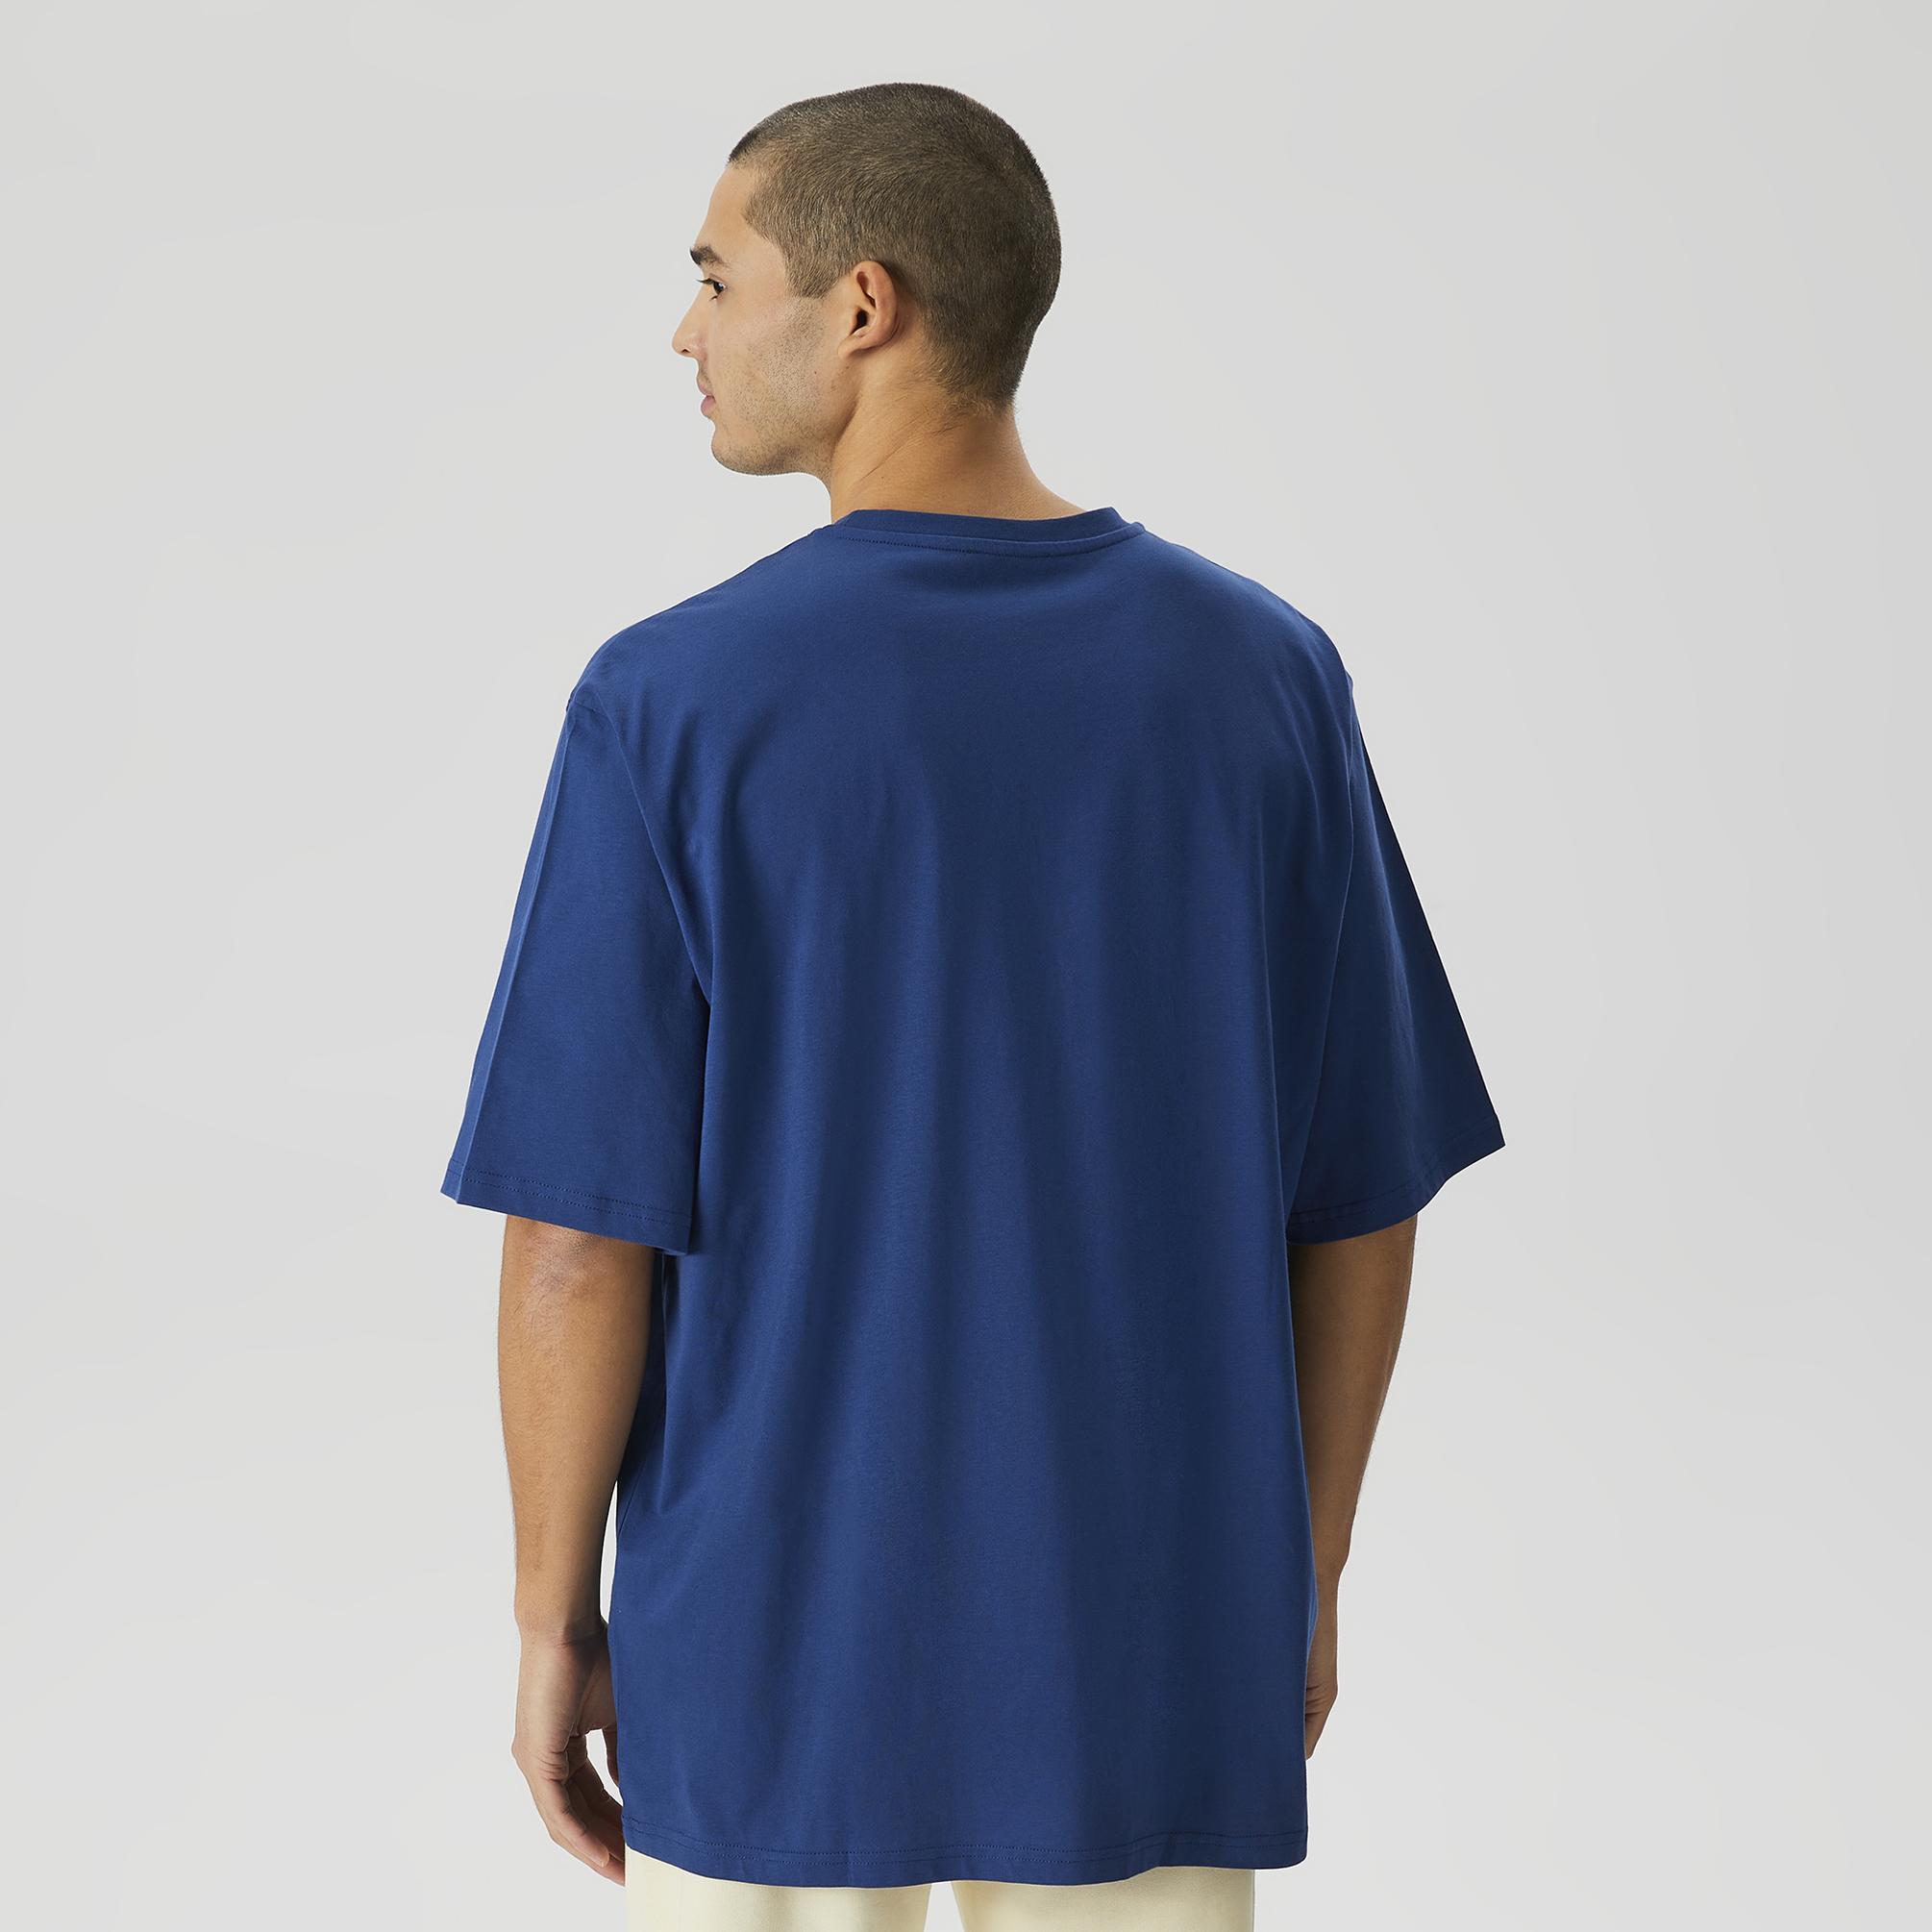  Les Benjamins Core Erkek Lacivert T-Shirt